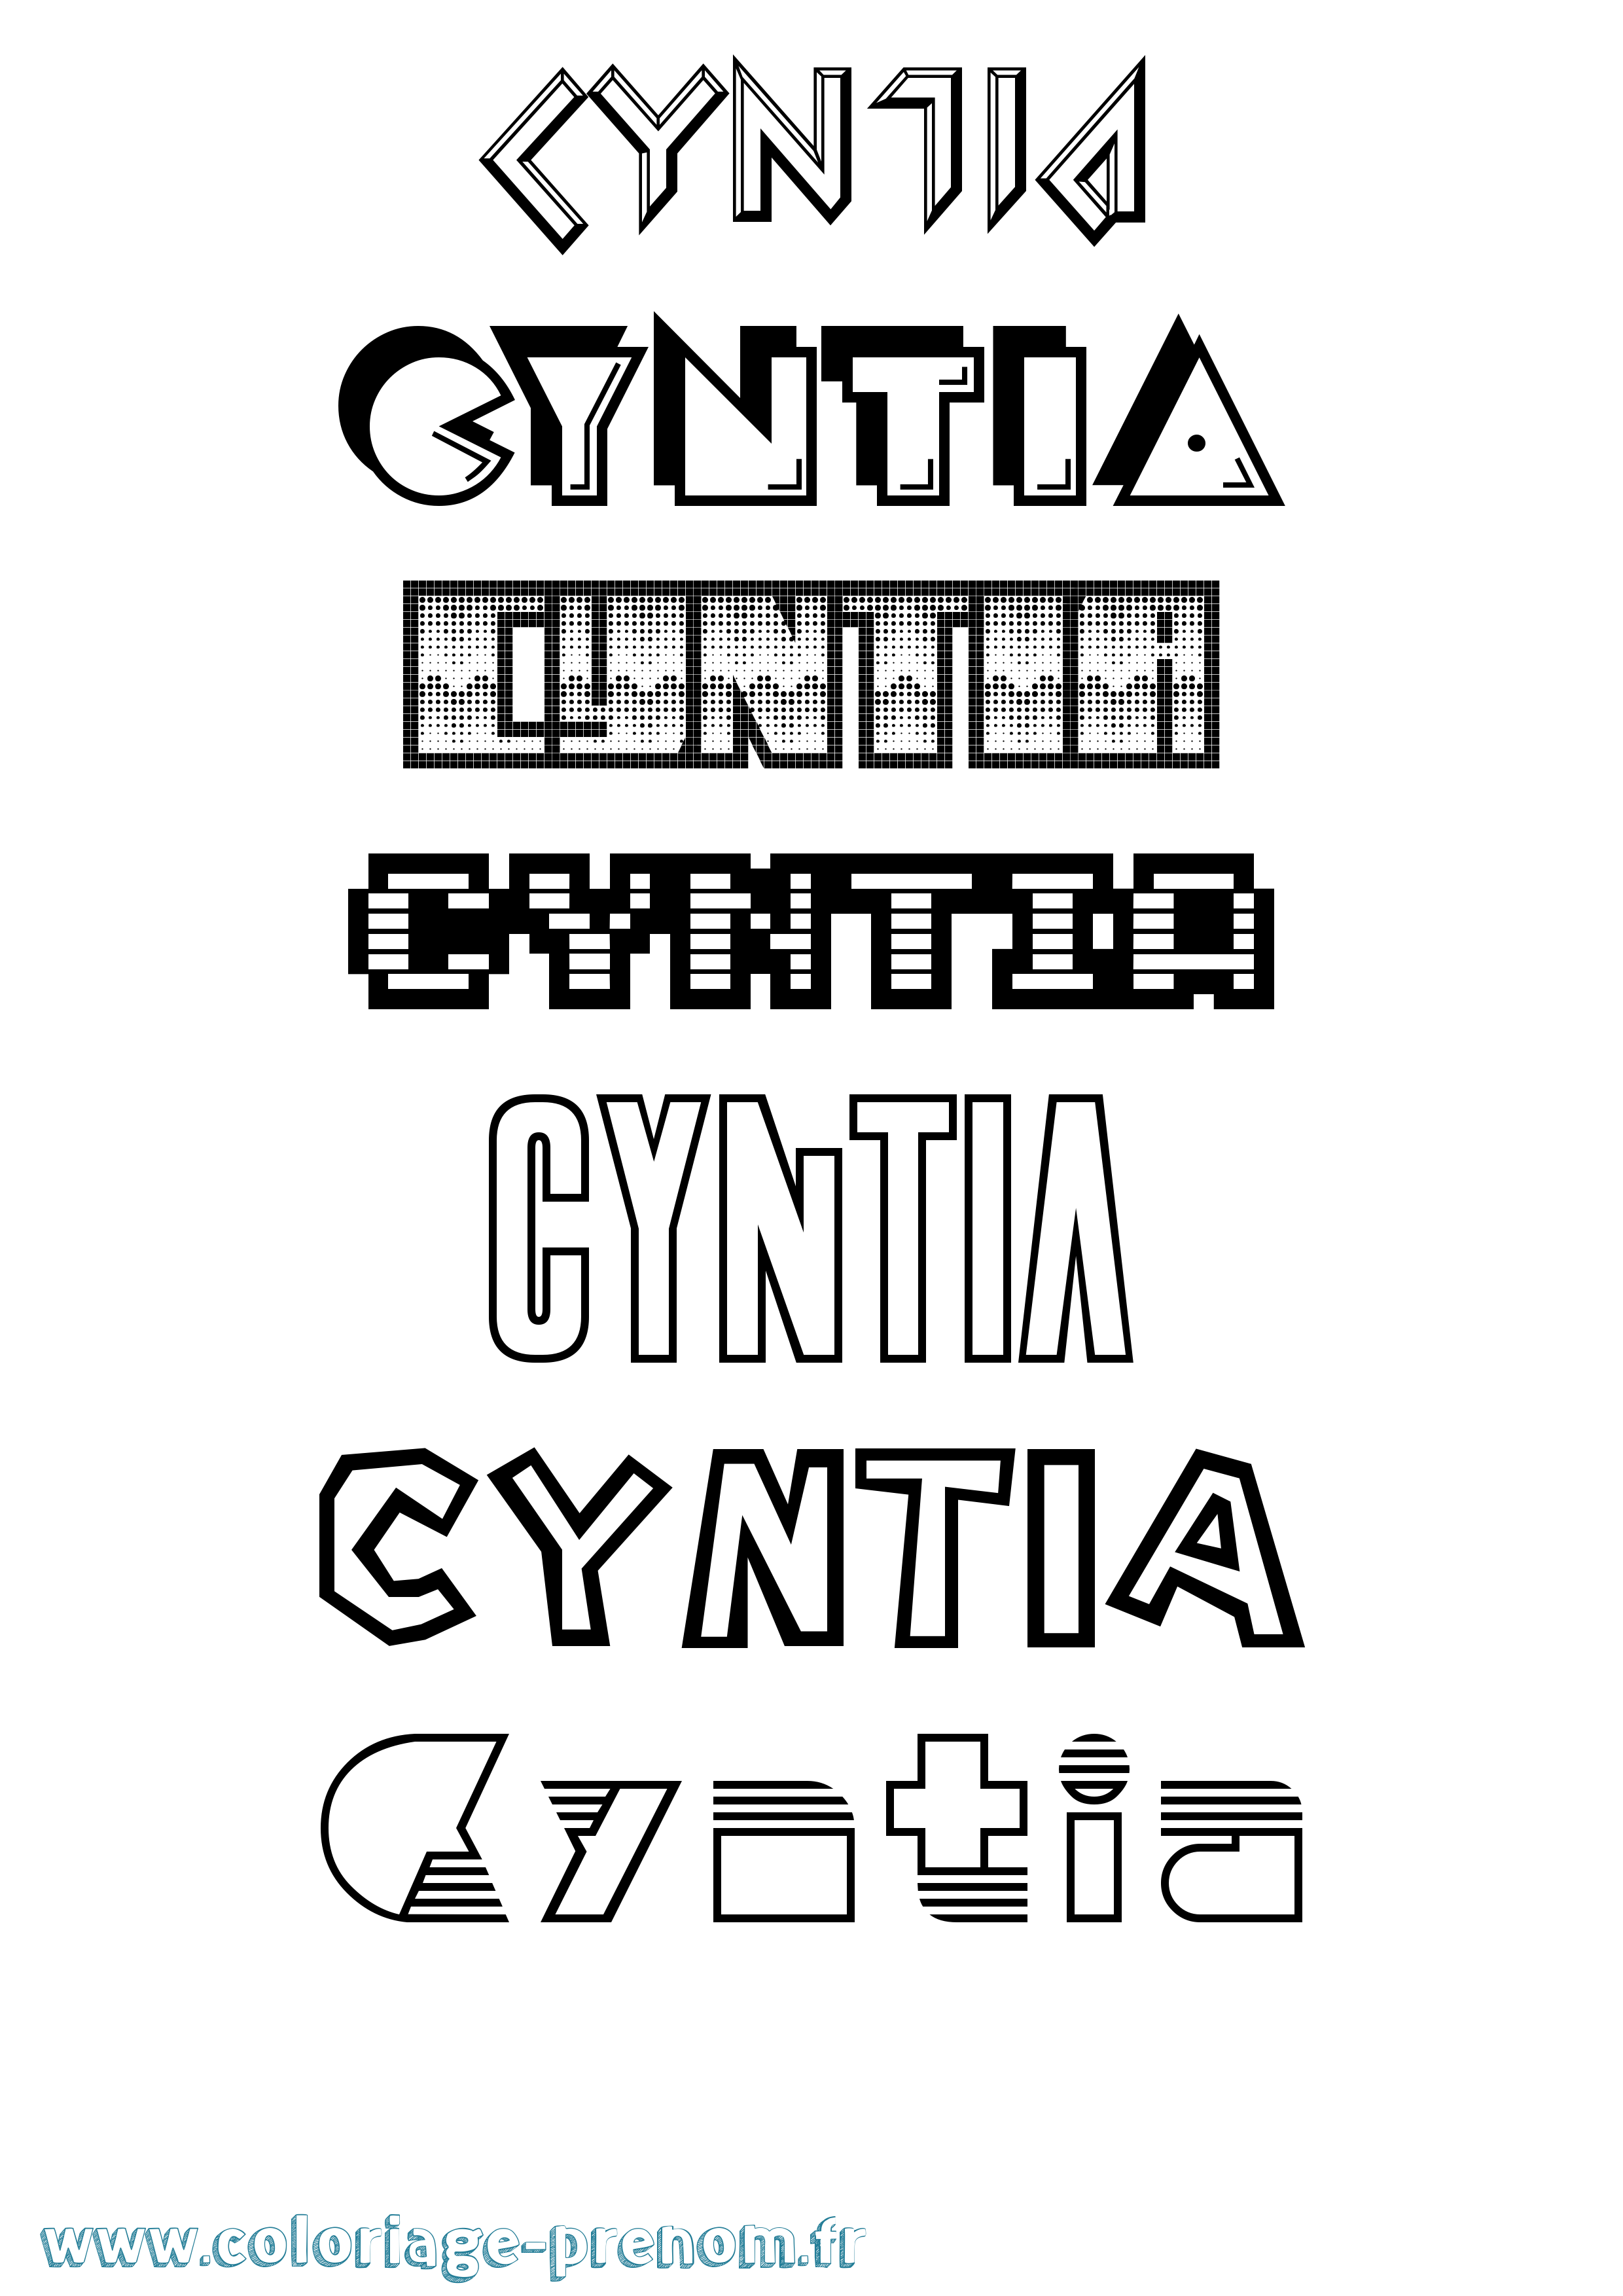 Coloriage prénom Cyntia Jeux Vidéos